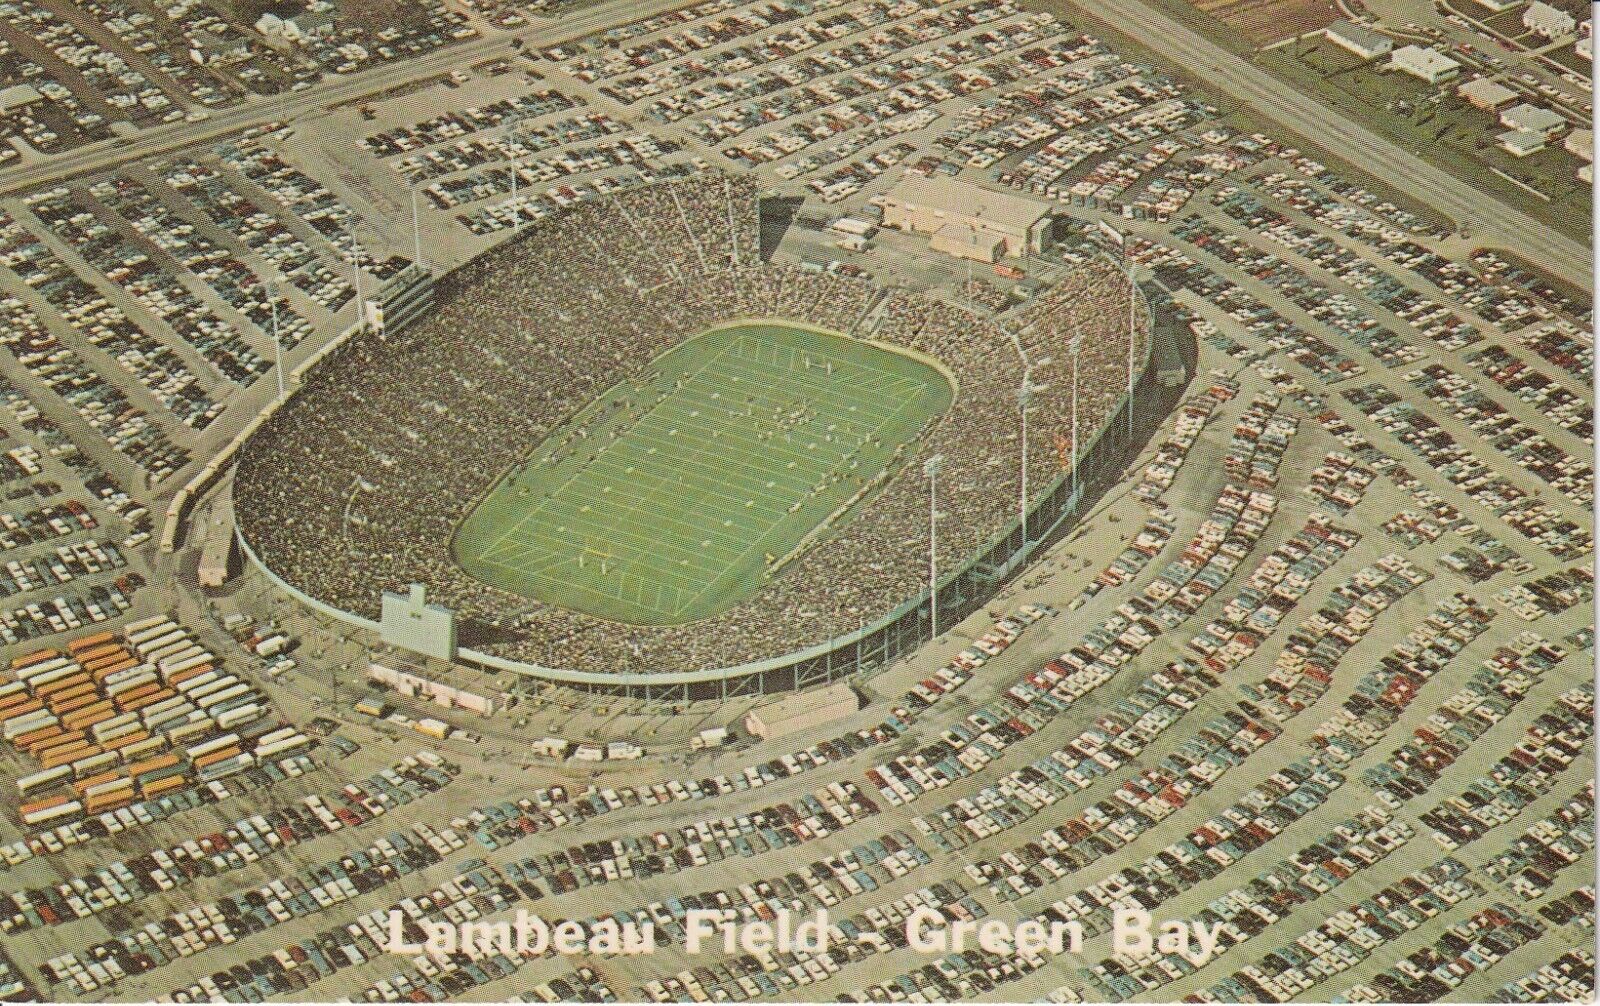 Tough to Find Green Bay Packers Lambeau Field Football Stadium Postcard